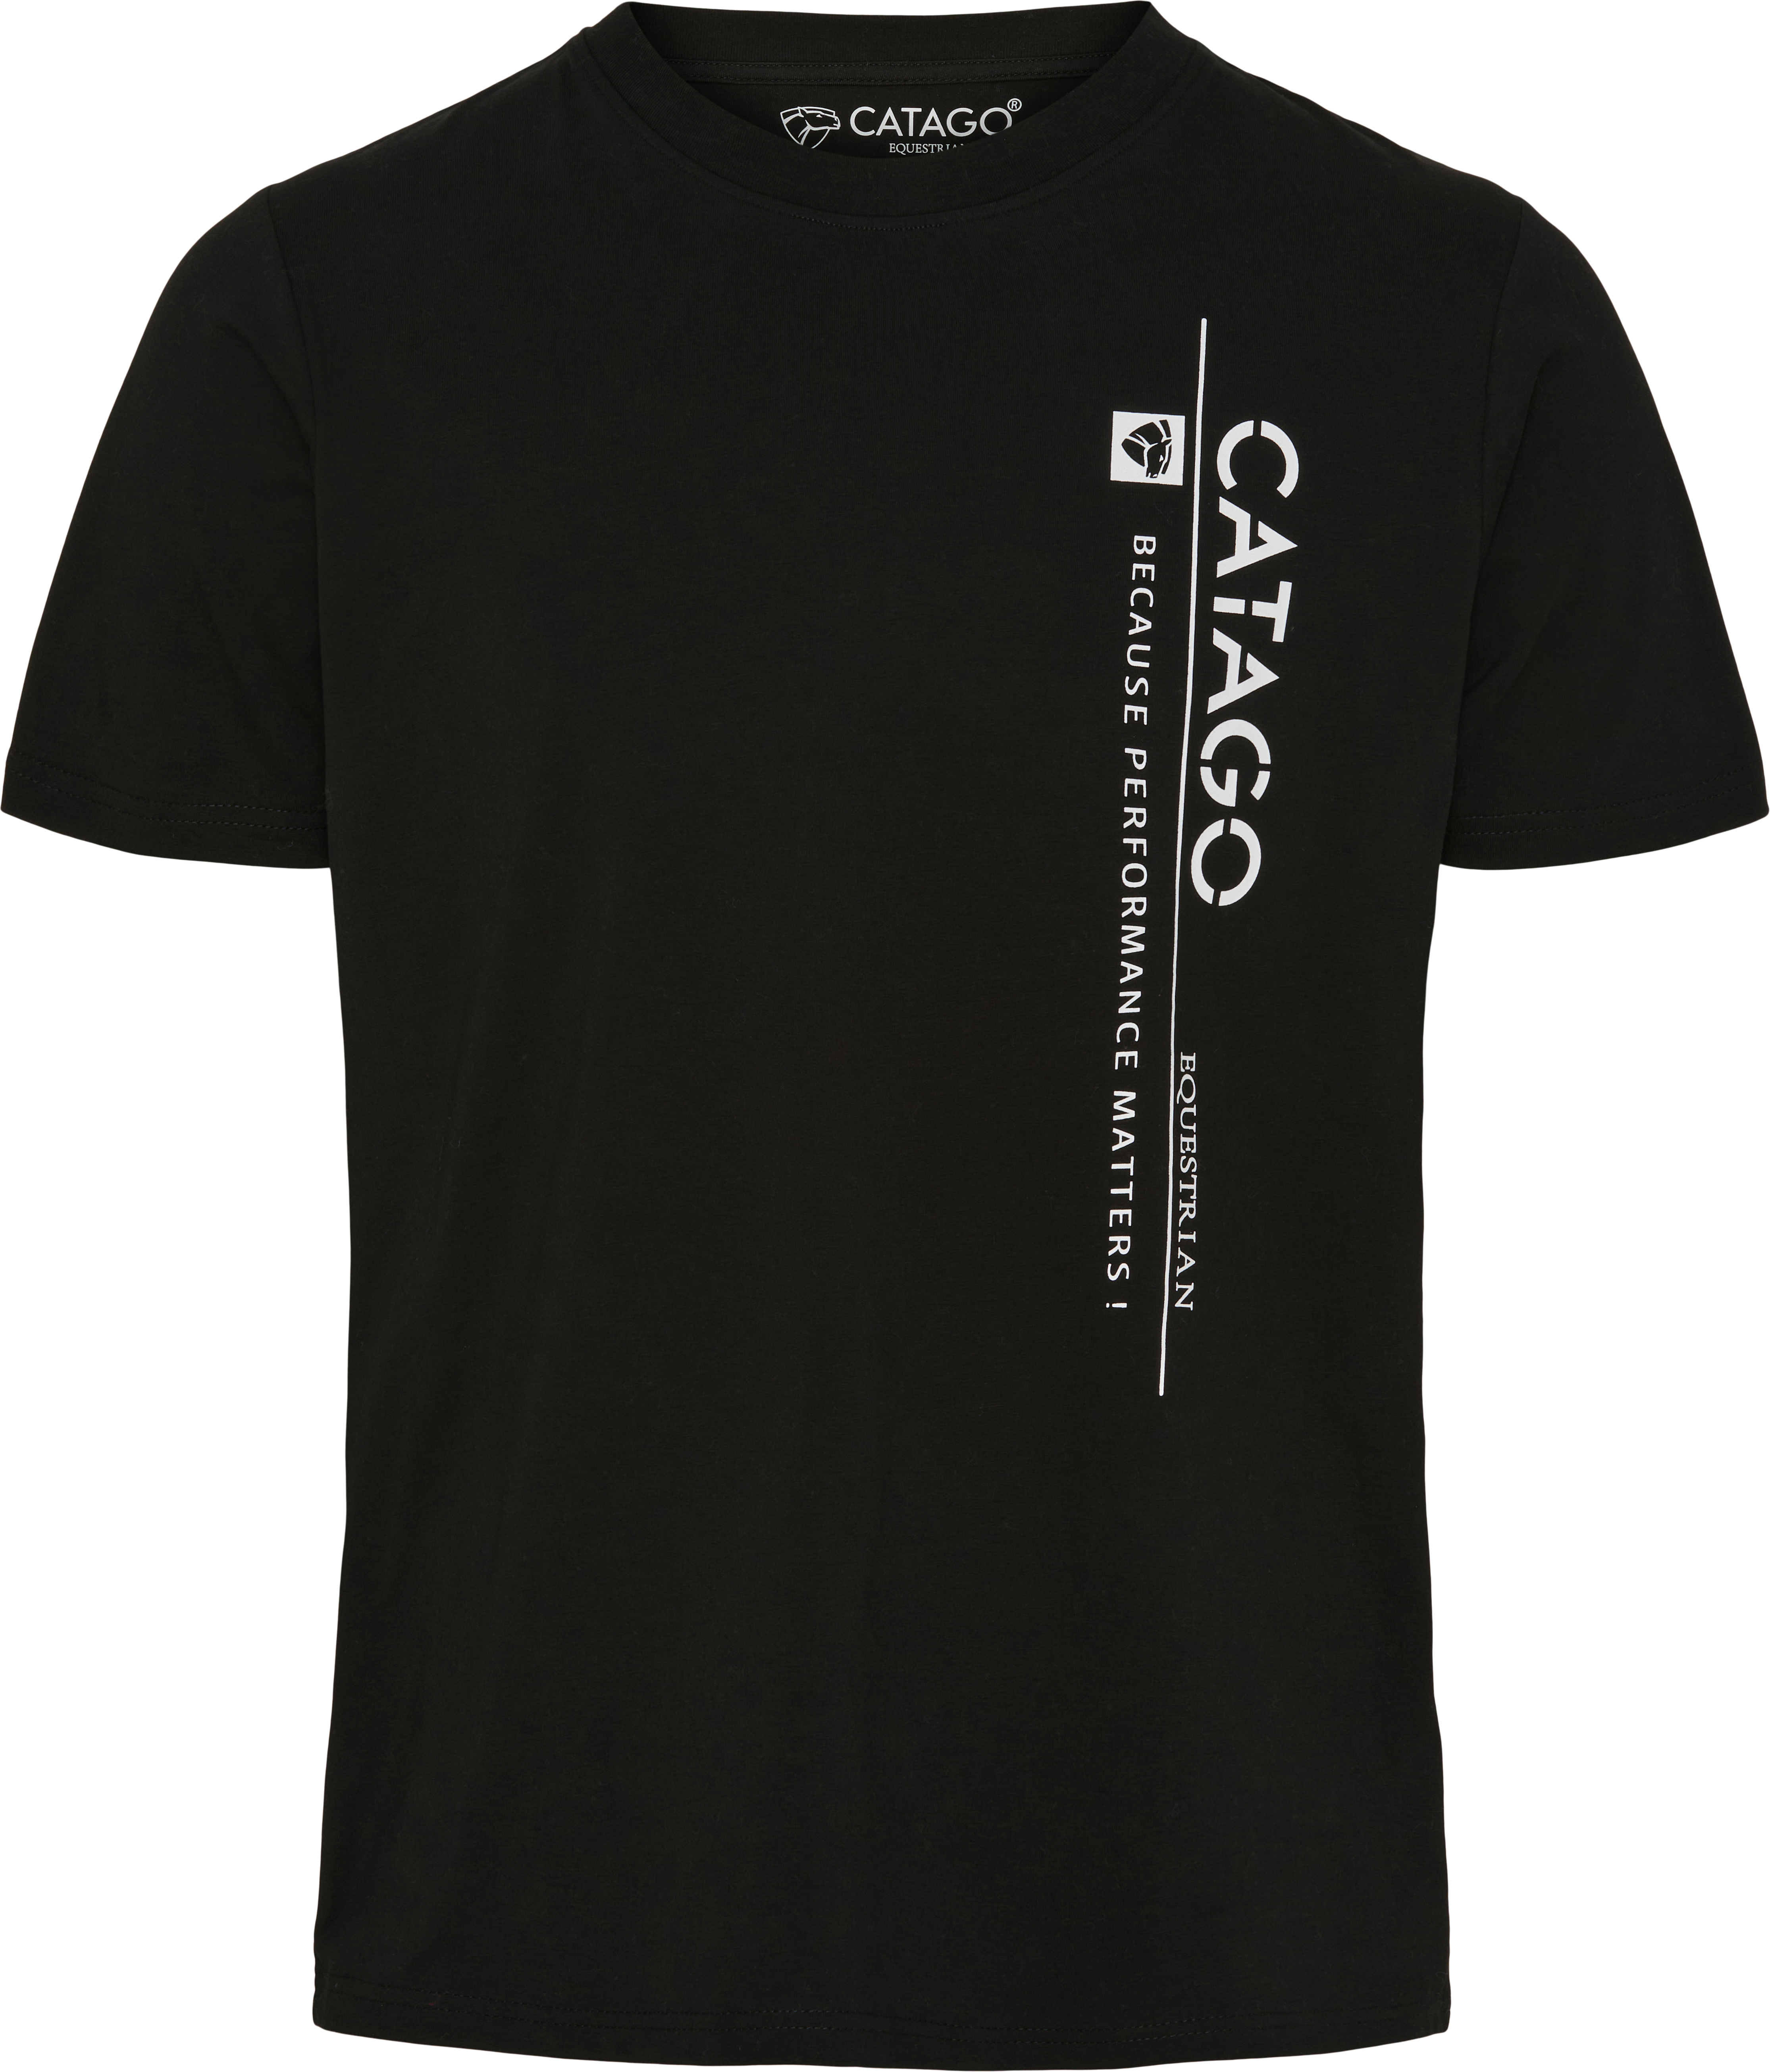 CATAGO MEN Nick T-shirt - Black (XS), Catago